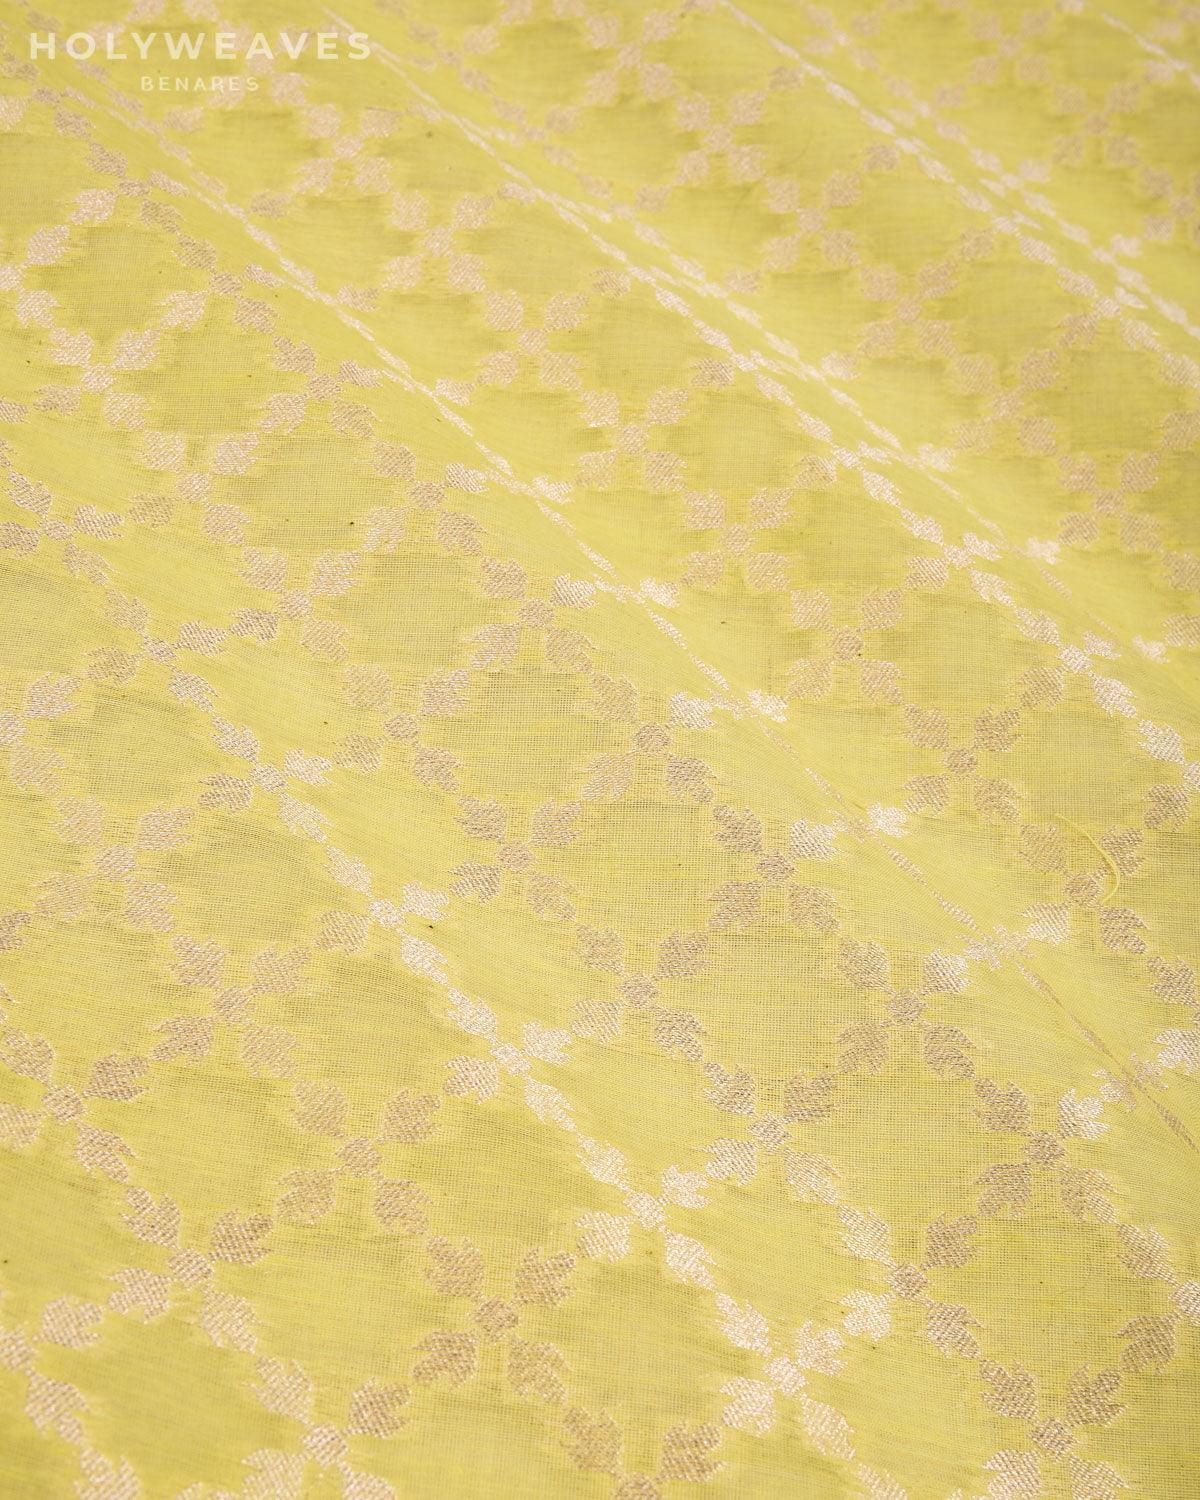 Lime Green Banarasi Silver Zari Jangla Cutwork Brocade Handwoven Cotton Silk Fabric - By HolyWeaves, Benares